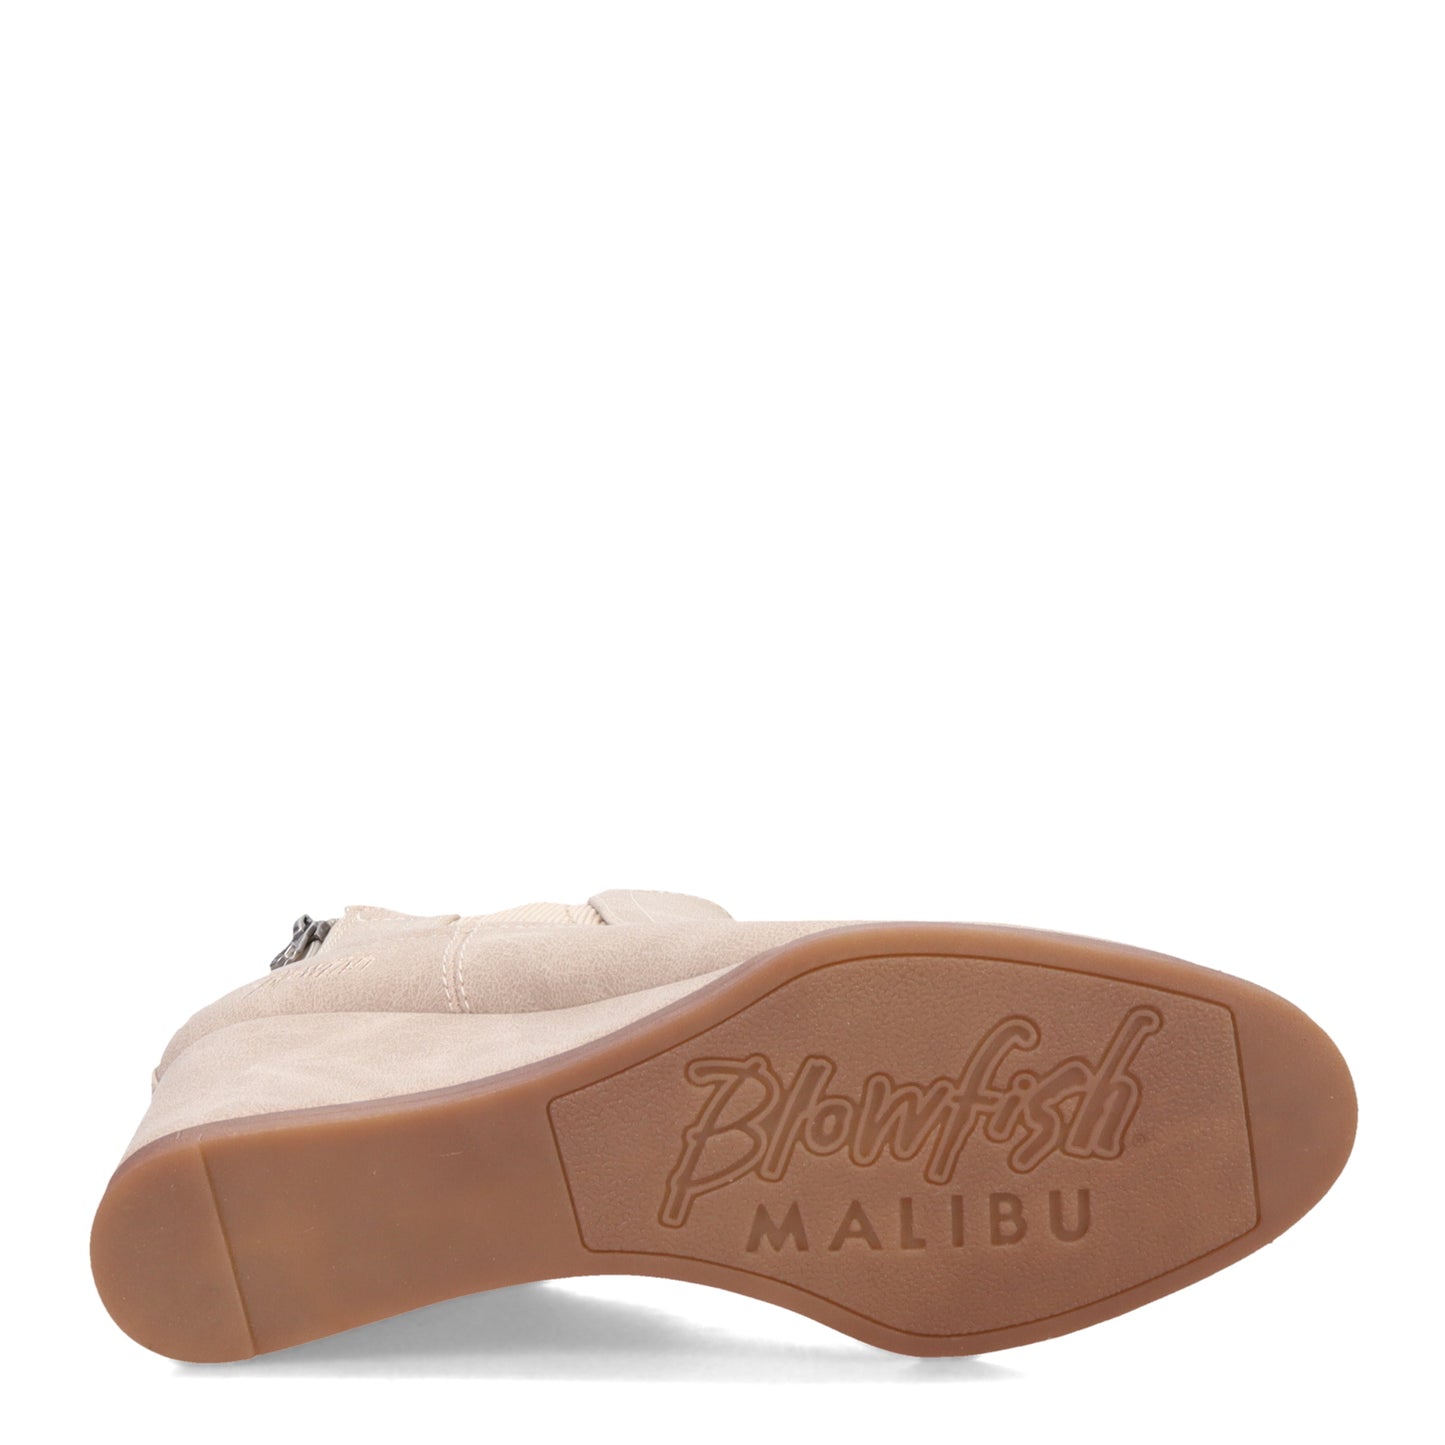 Peltz Shoes  Women's Blowfish Malibu Praline Boot Whitesands Prospector BF-10257-108